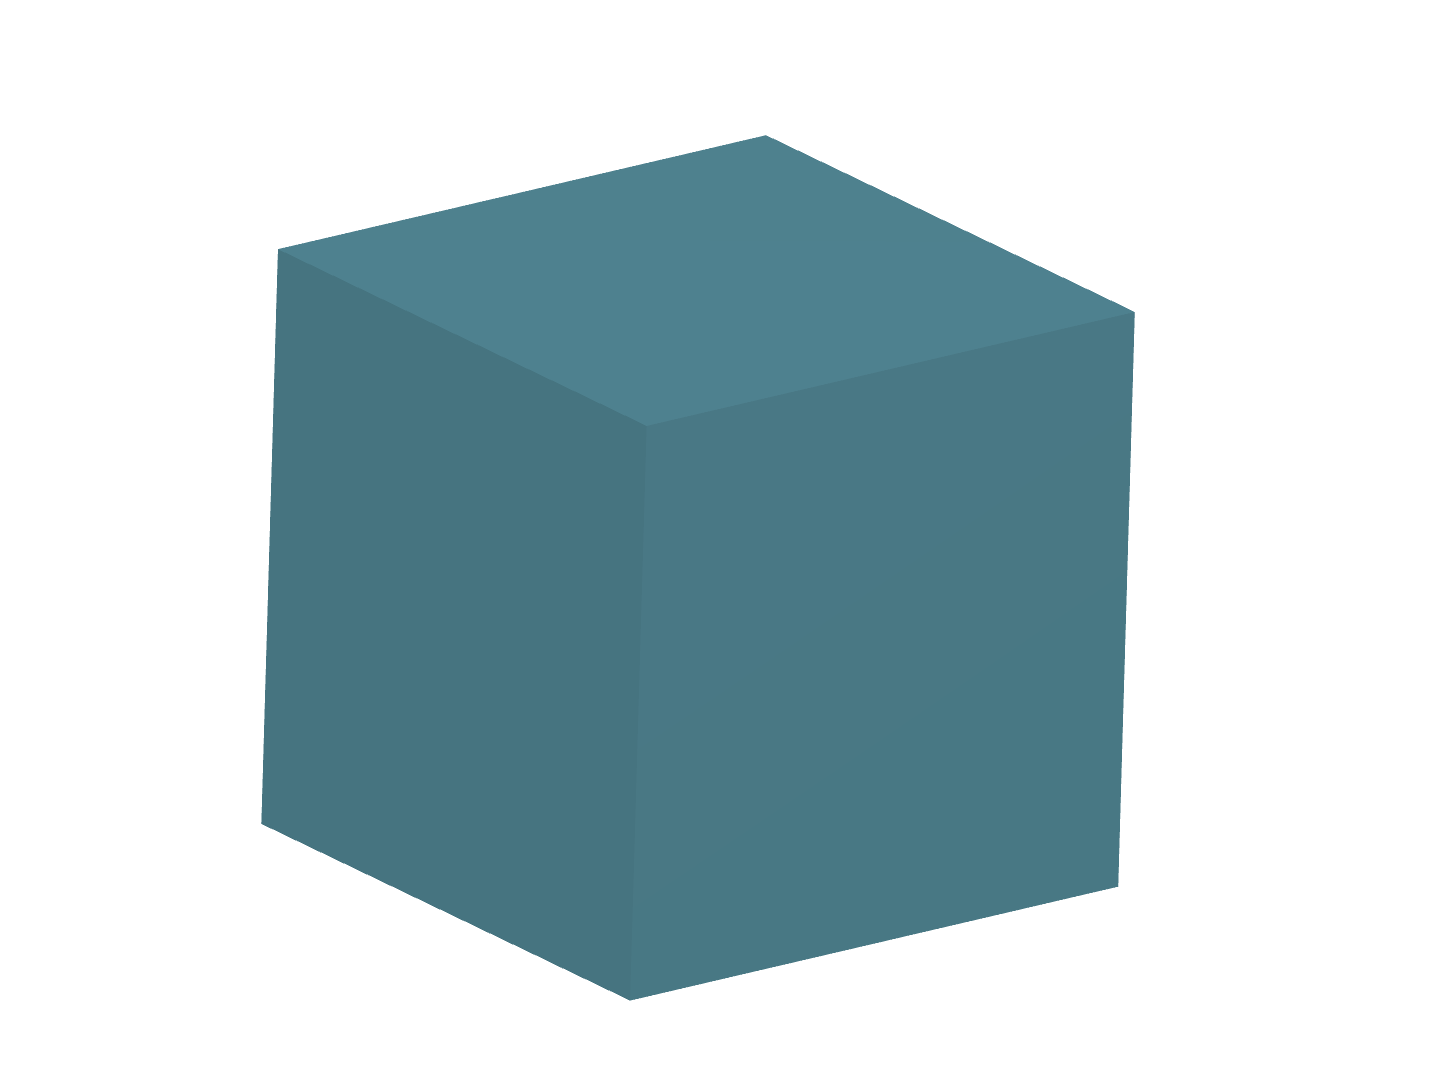 Cube analysis image